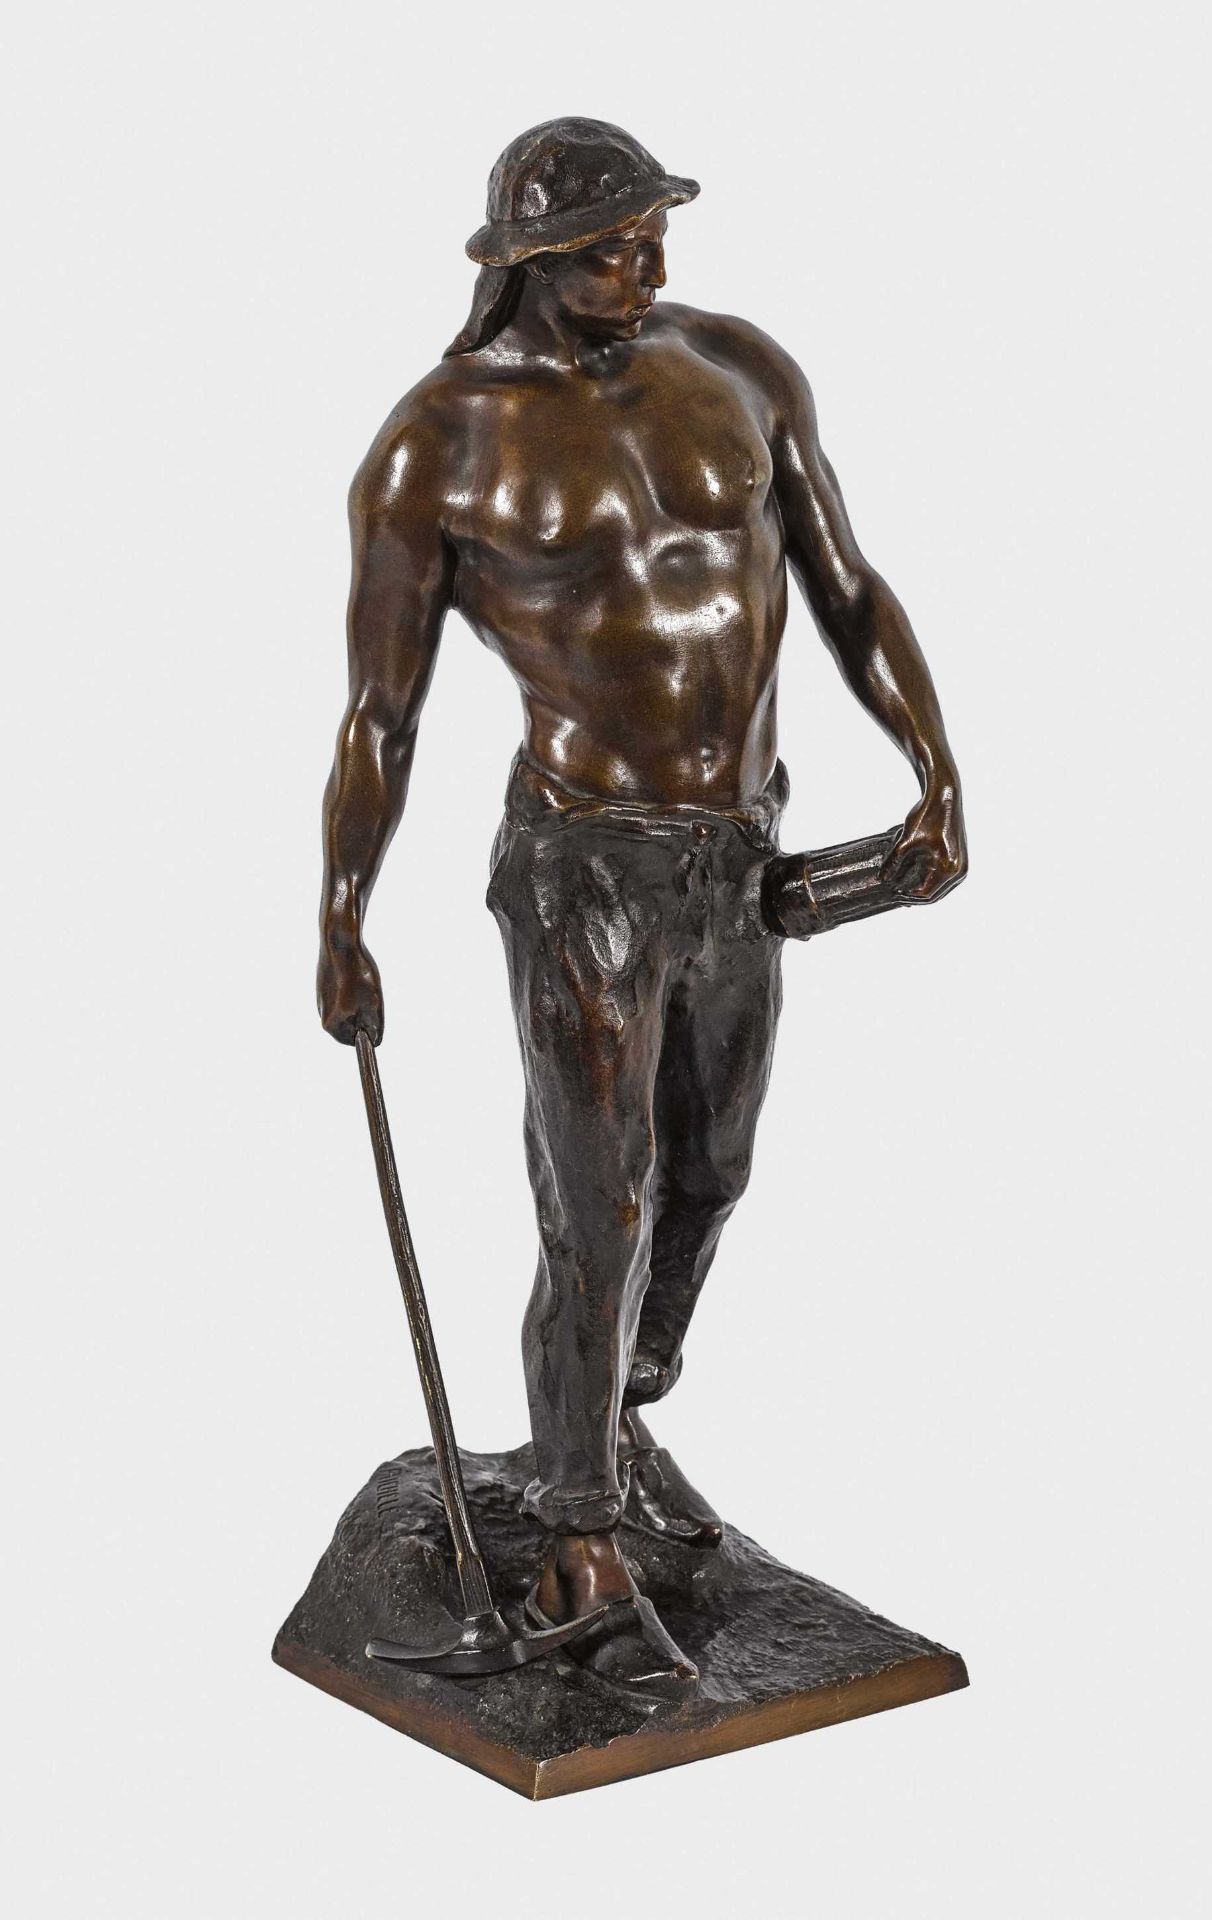 AICHELE, PAULMarkdorf 1859 - 1910 BerlinMinenarbeiter.Bronze, dunkel patiniert,a. Plinthe sig. "